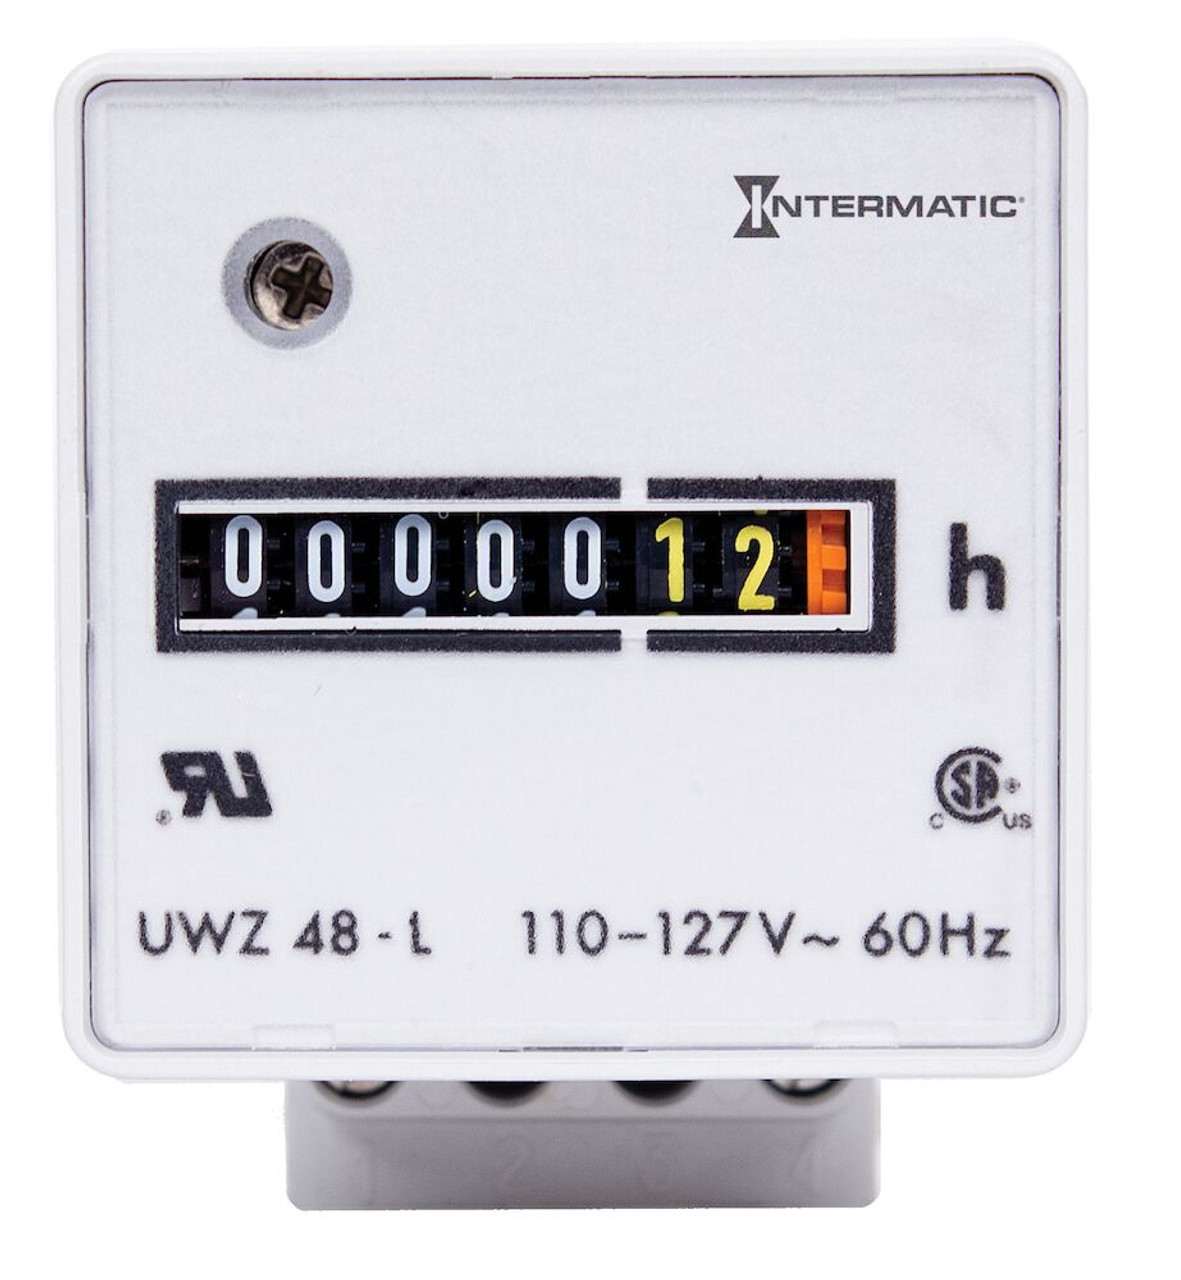 Intermatic UWZ48-24U Counters Meters